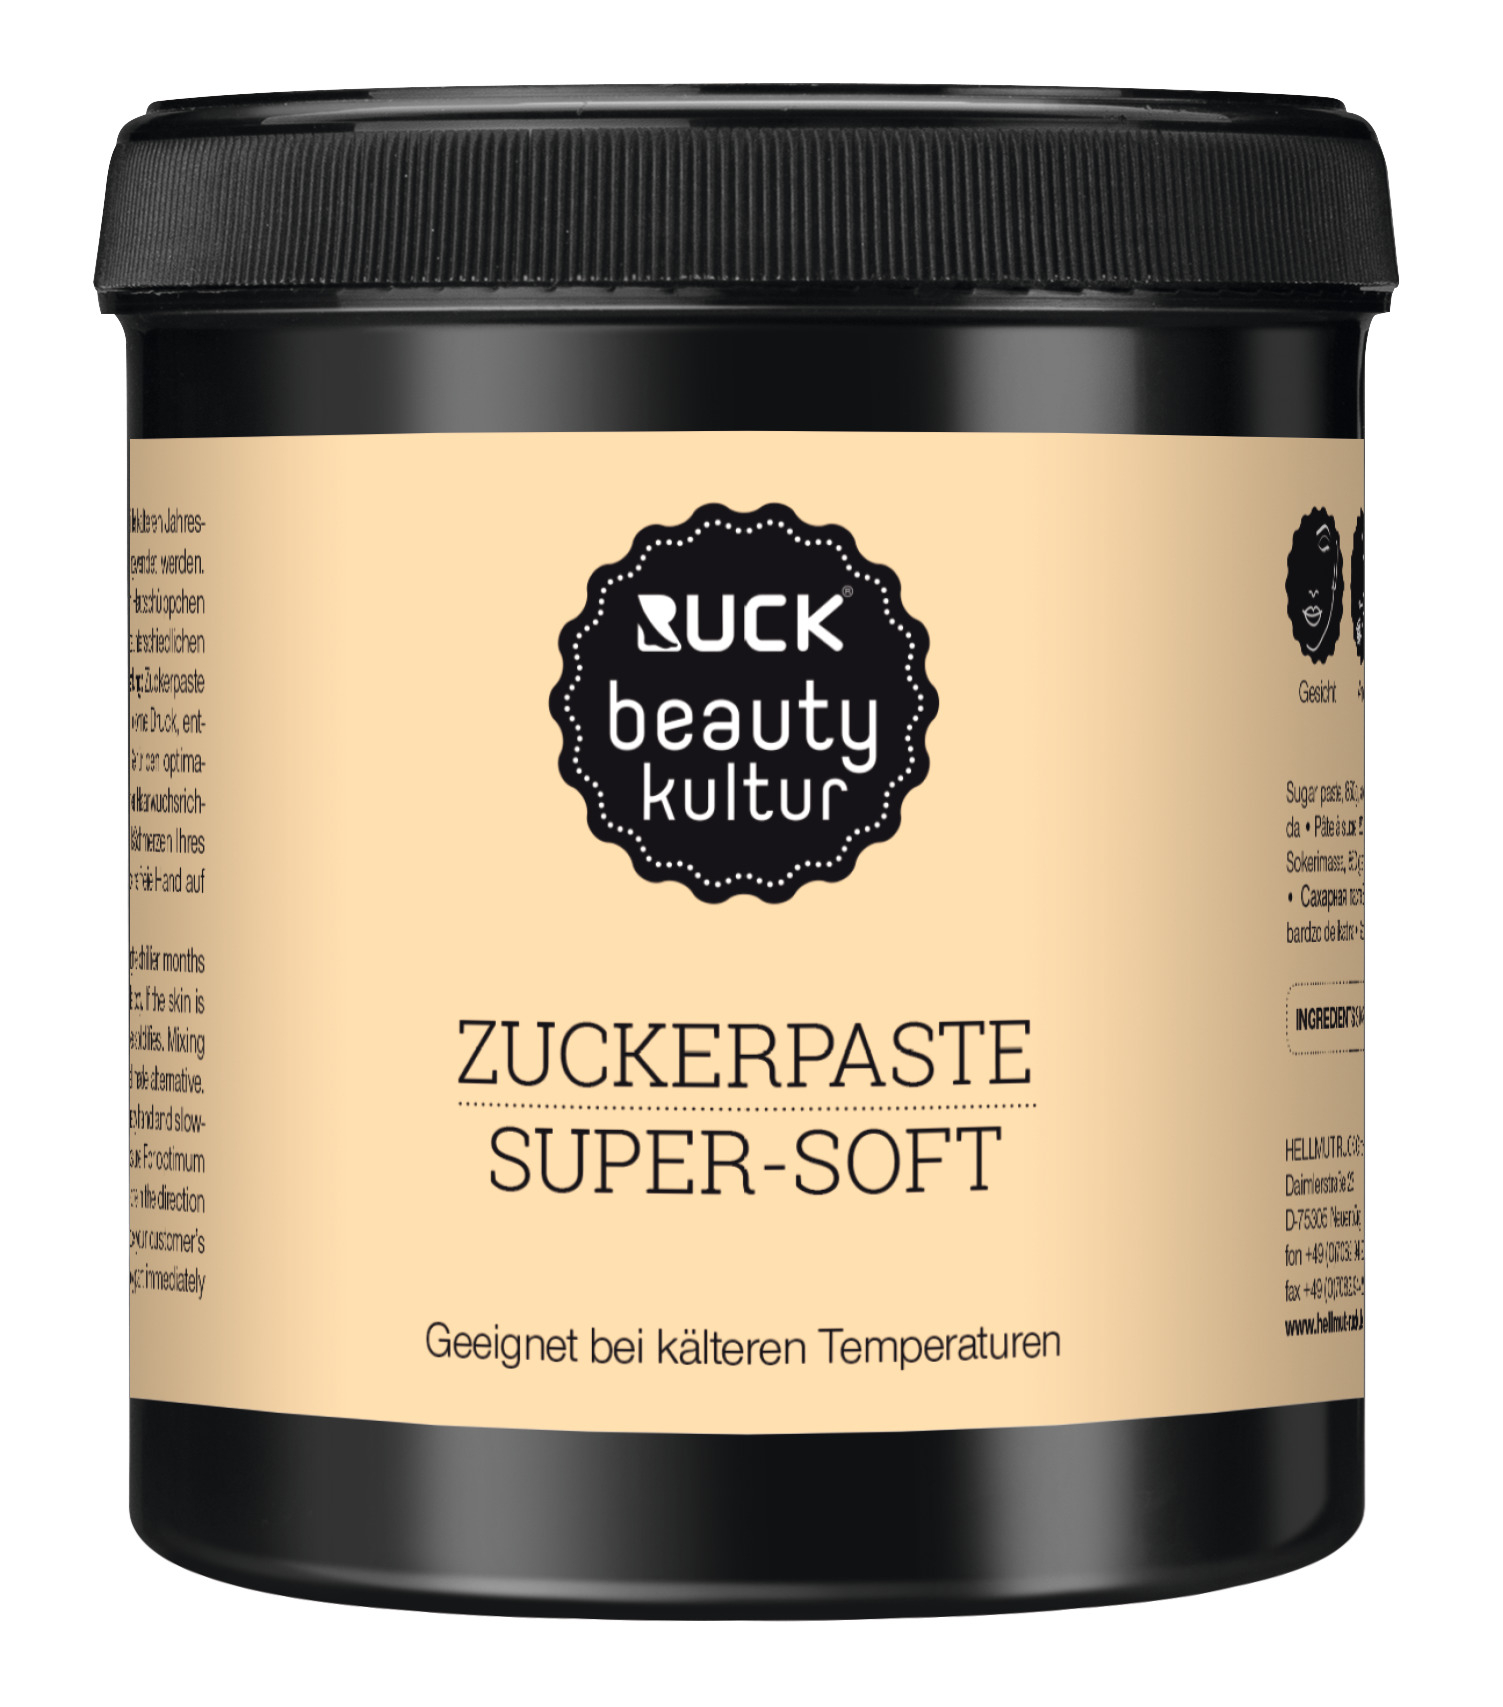 RUCK beautykultur Zuckerpaste | 850 g